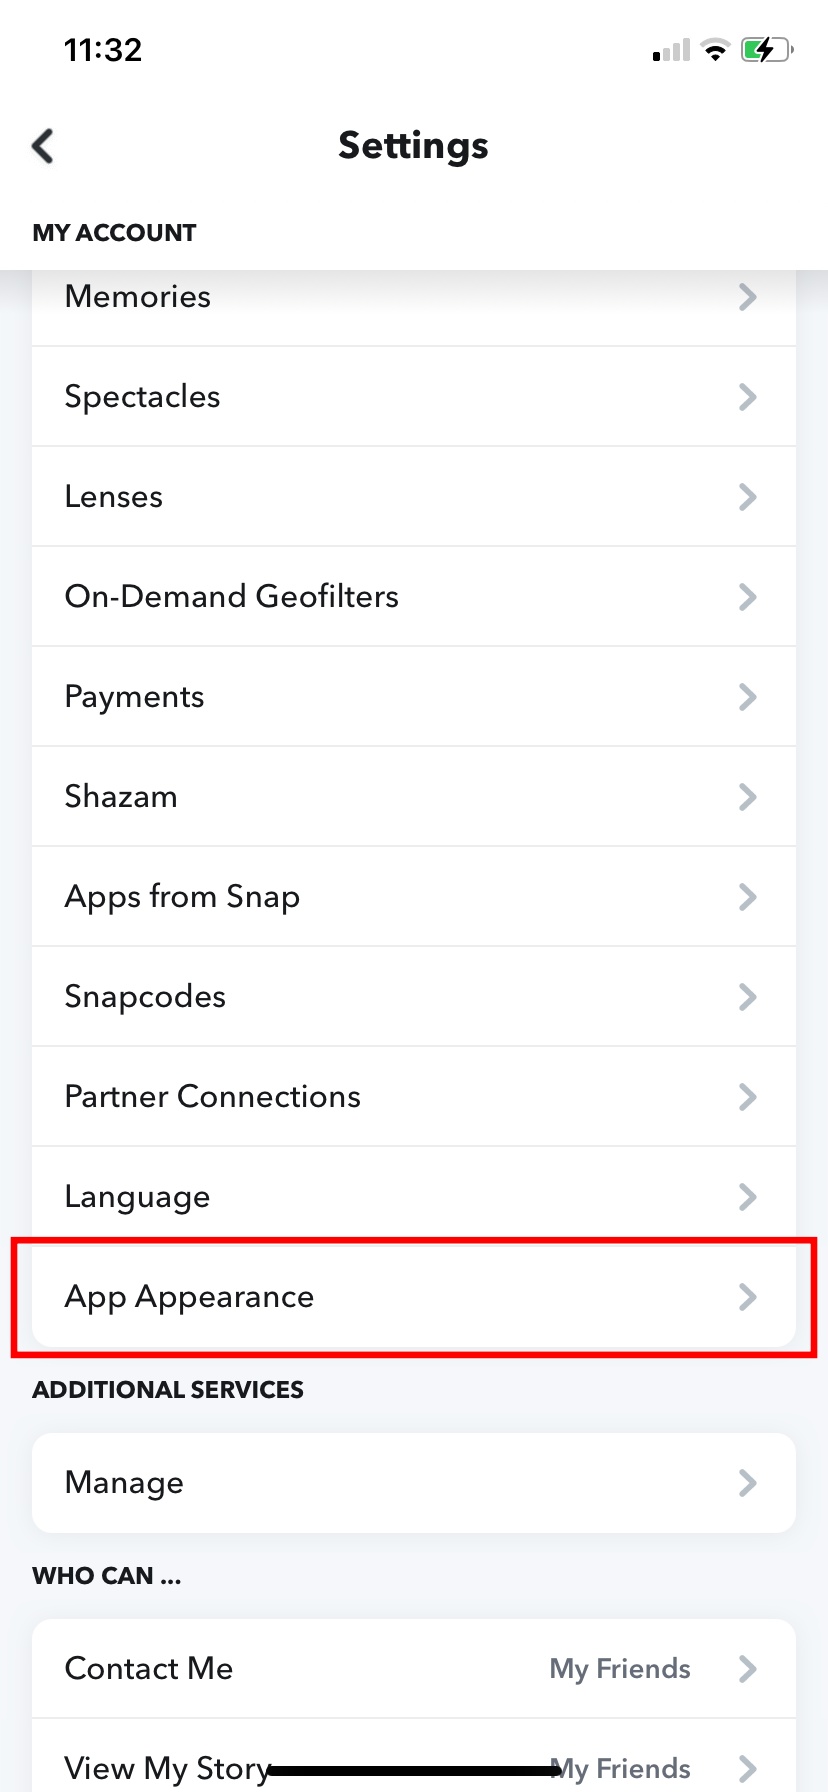 Step 3 - Select App Appearance